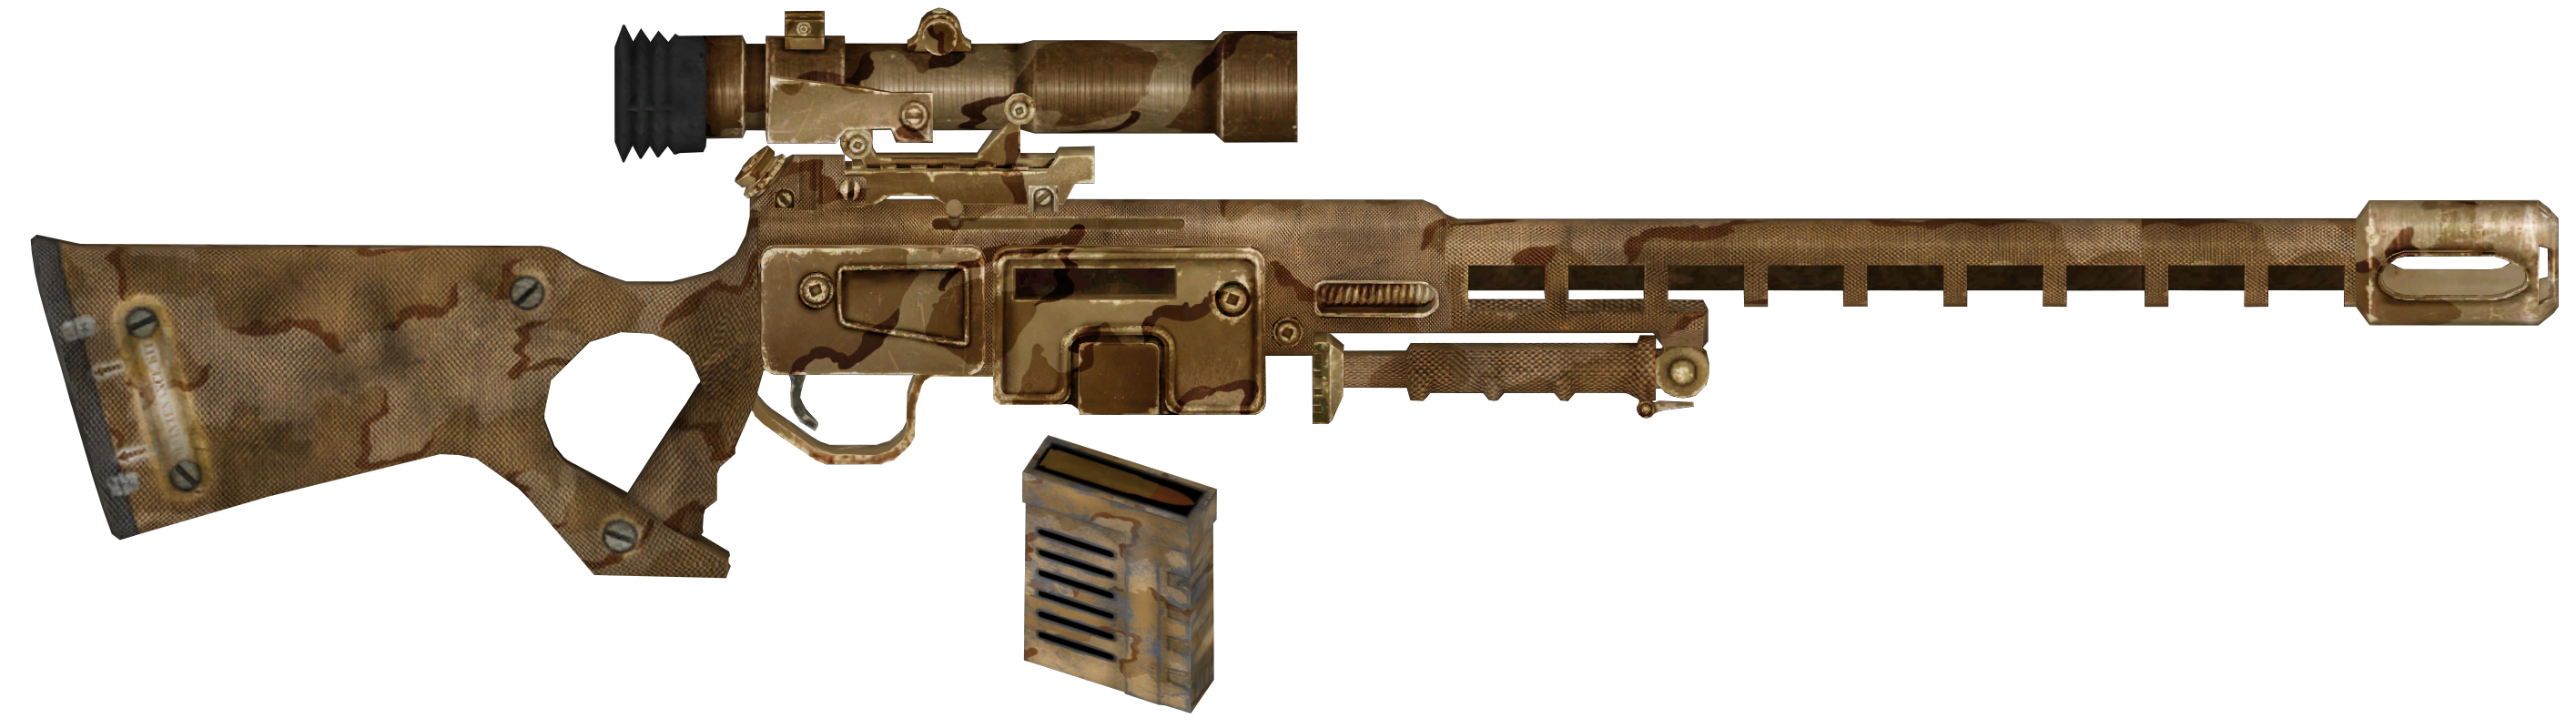 снайперская винтовка dks 501 для fallout 4 фото 53